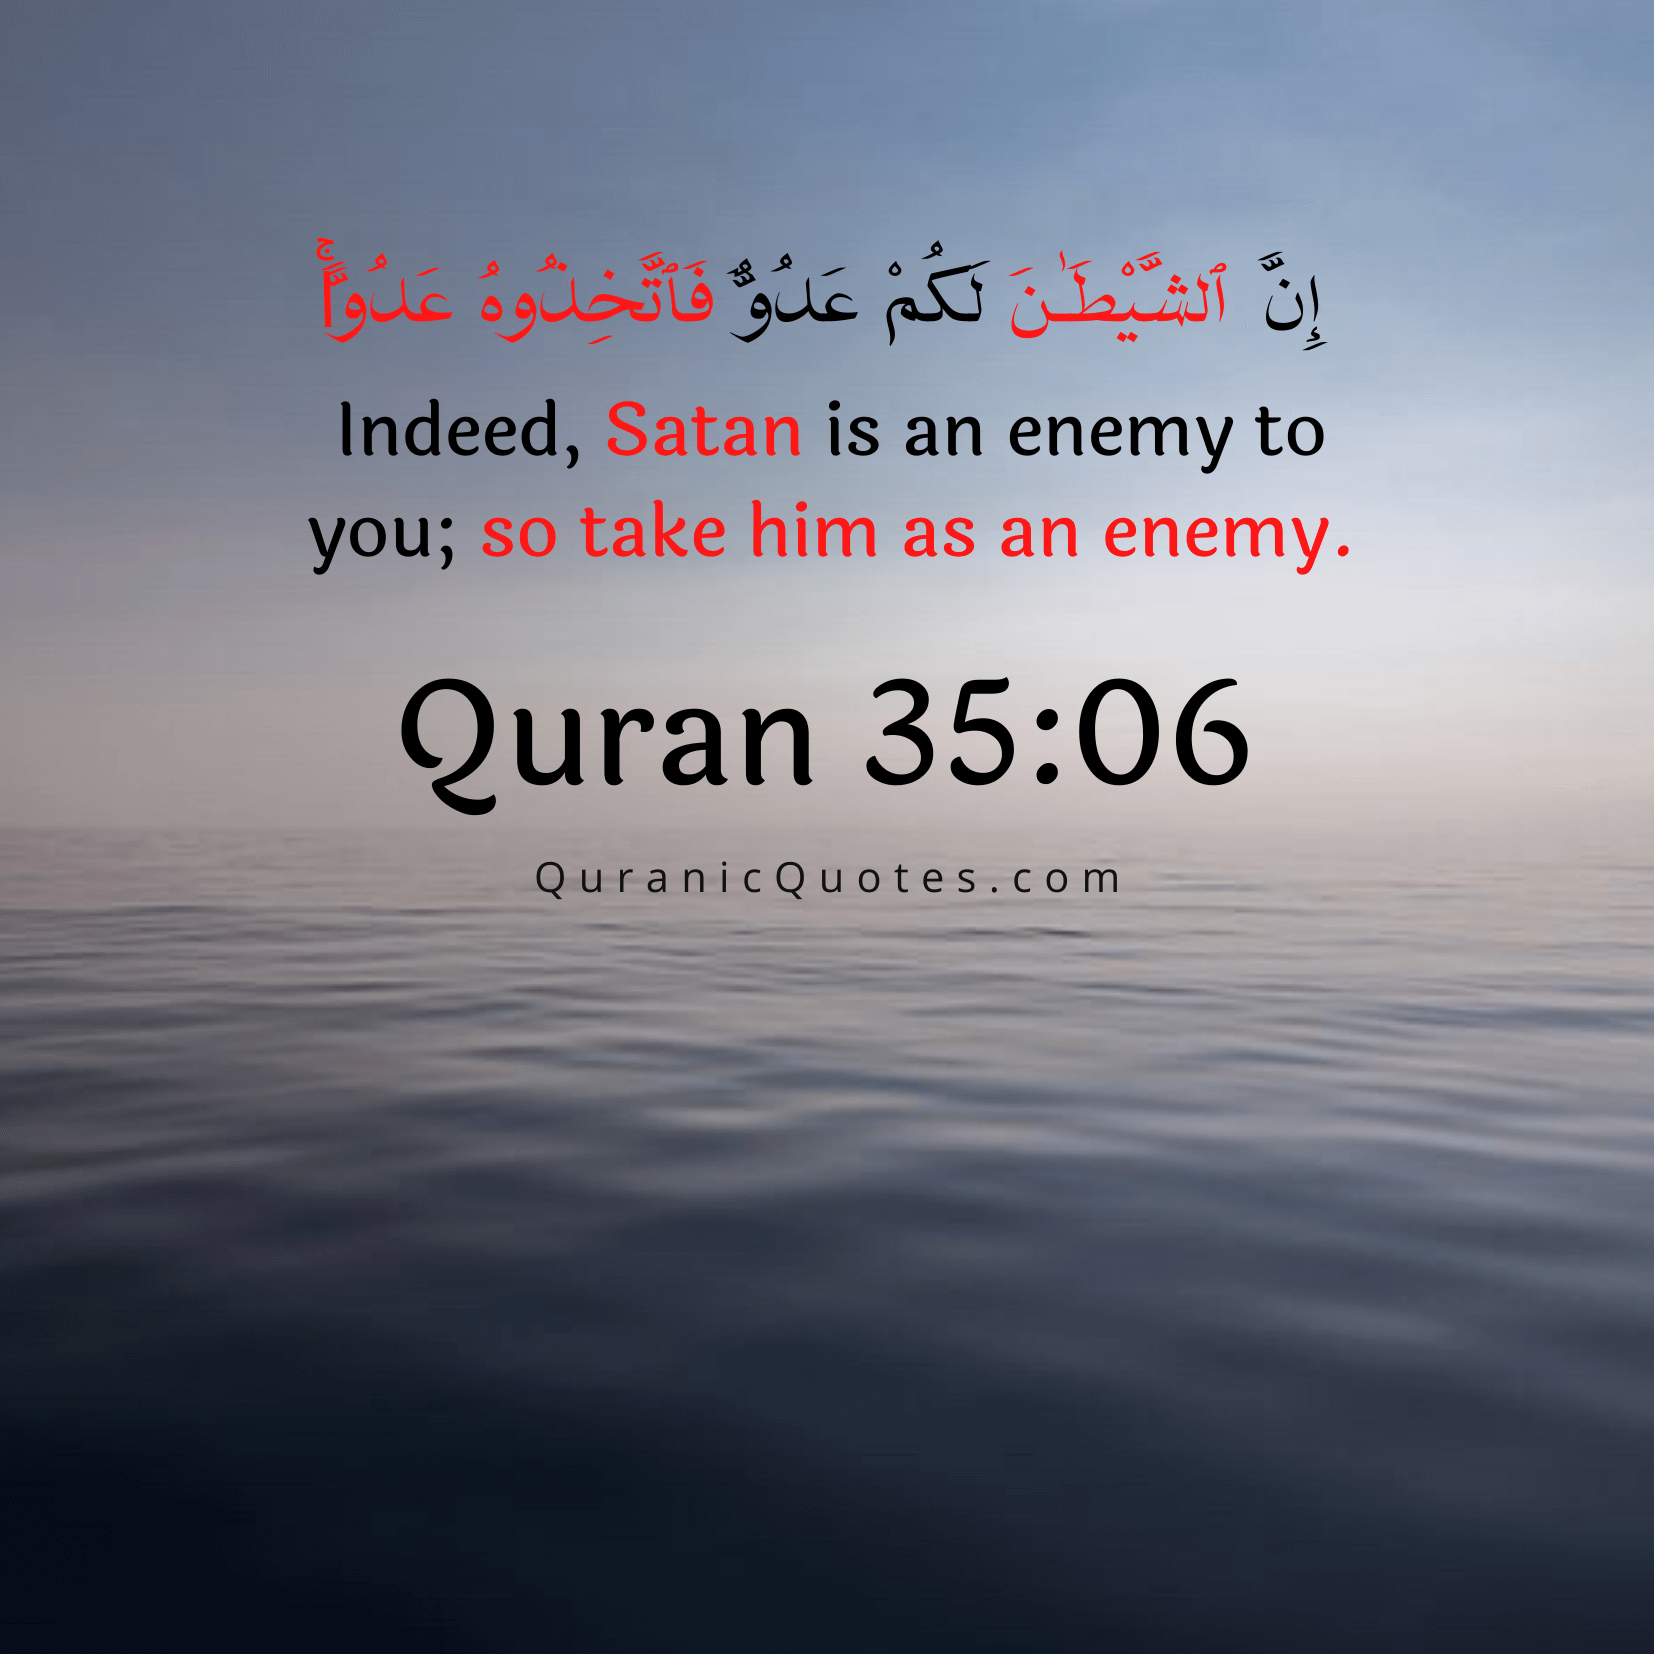 Quranic Quotes in English 418